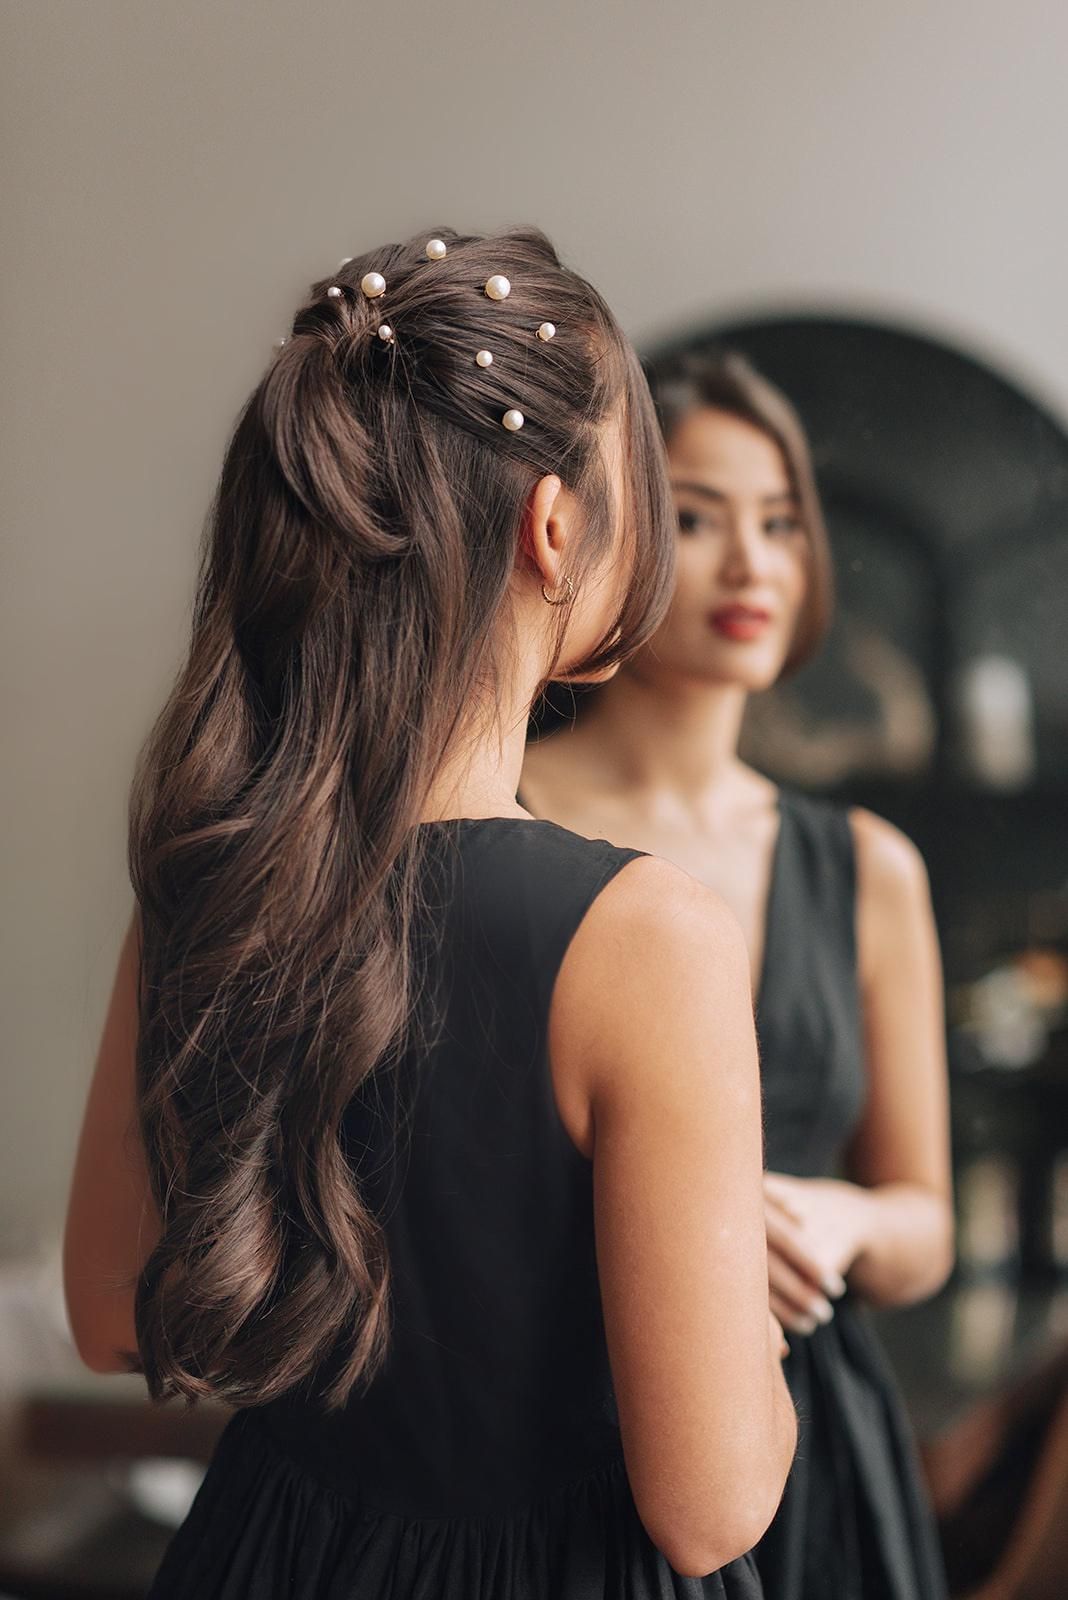 Stylish & Formal Hair Styles for Prom | Sydney's Closet